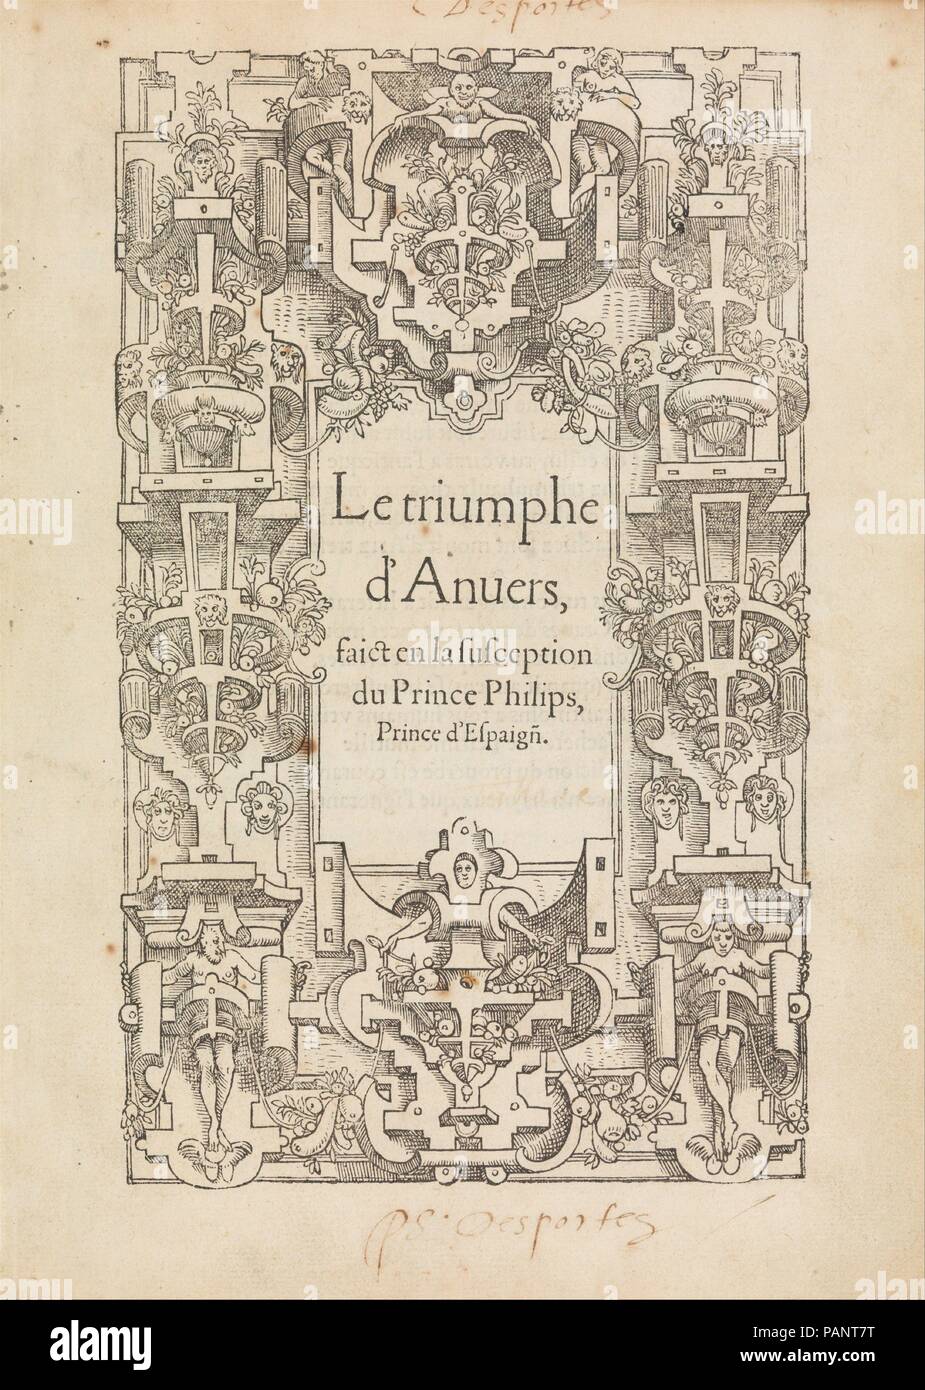 Le triomphe d'Anvers faict en la susception du Prince Philips, Prince d'Espaign[e]. Artist: Pieter Coecke van Aelst (Netherlandish, Aelst 1502-1550 Brussels). Author: Written by Cornelius Grapheus (Netherlandish, Aalst ca. 1482-1558 Antwerp). Dimensions: 10 7/16 x 8 1/16 x 13/16 in.  (26.5 x 20.5 x 2 cm). Printer: Printed by Gillis Coppens van Diest (Flemish). Published in: Antwerp. Publisher: Published by Pieter Coecke van Aelst (Netherlandish, Aelst 1502-1550 Brussels). Date: 1550. Museum: Metropolitan Museum of Art, New York, USA. Stock Photo